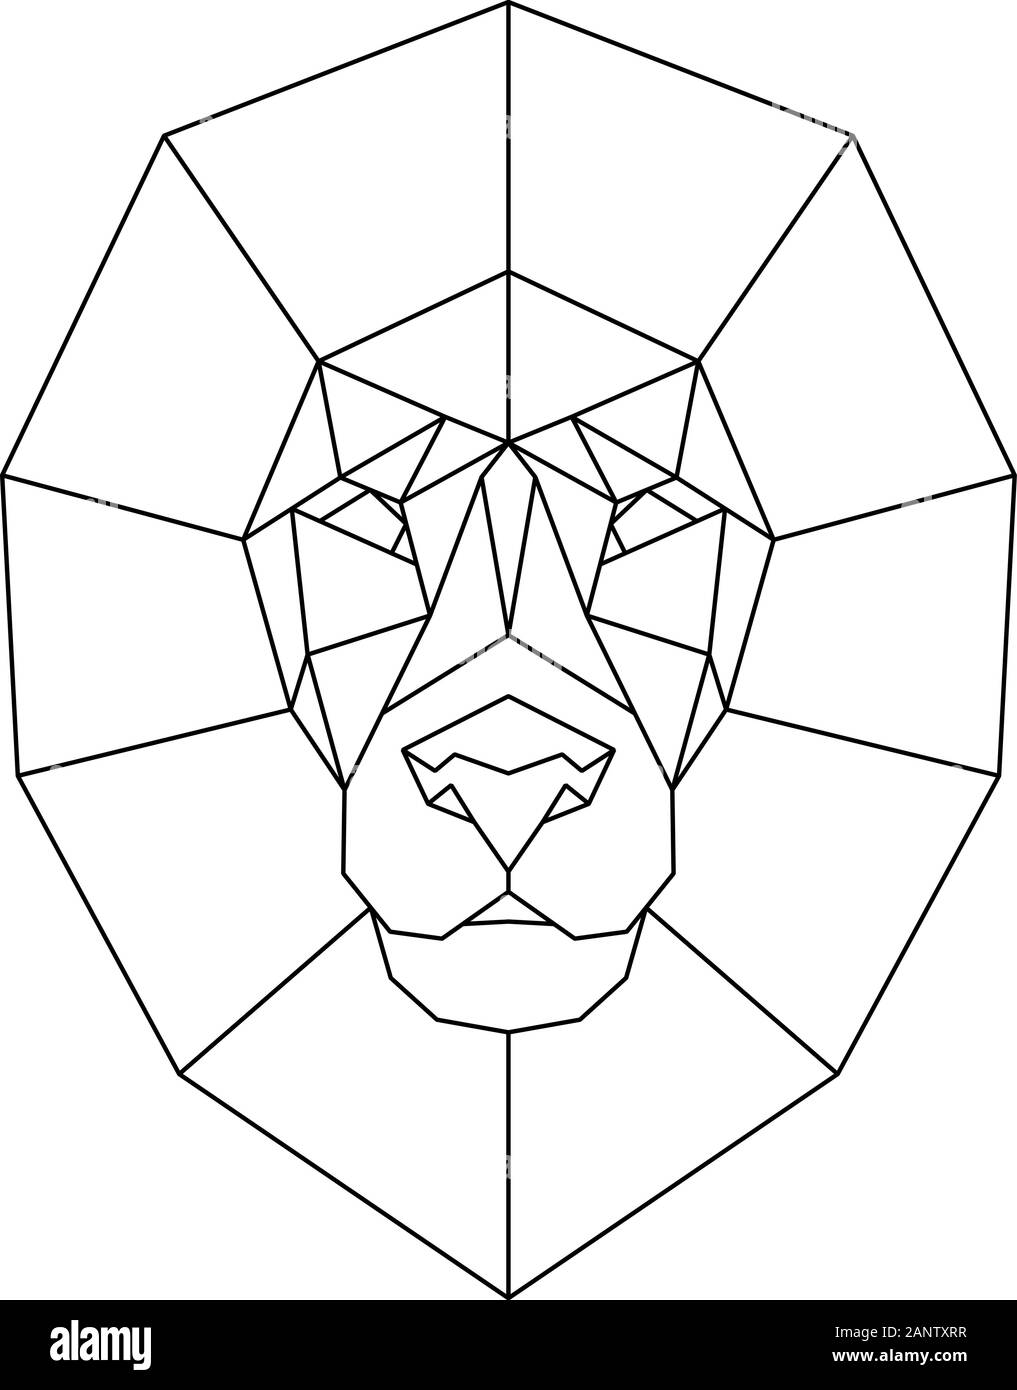 Abstract polygonal head of lion. Geometric vector illustration. Stock Vector